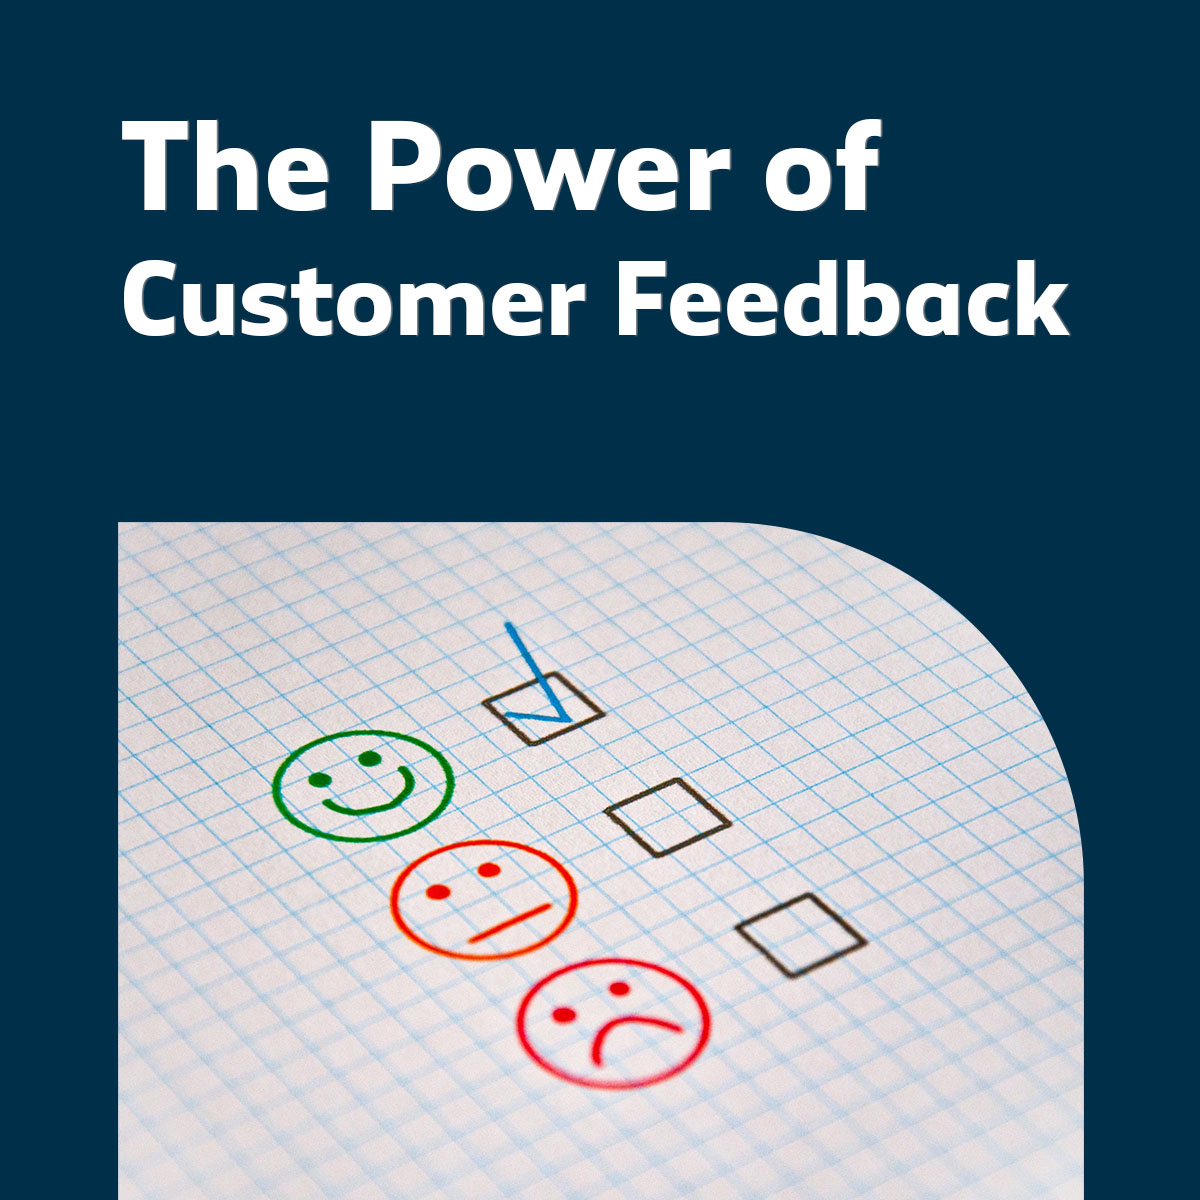 The power of customer feedback